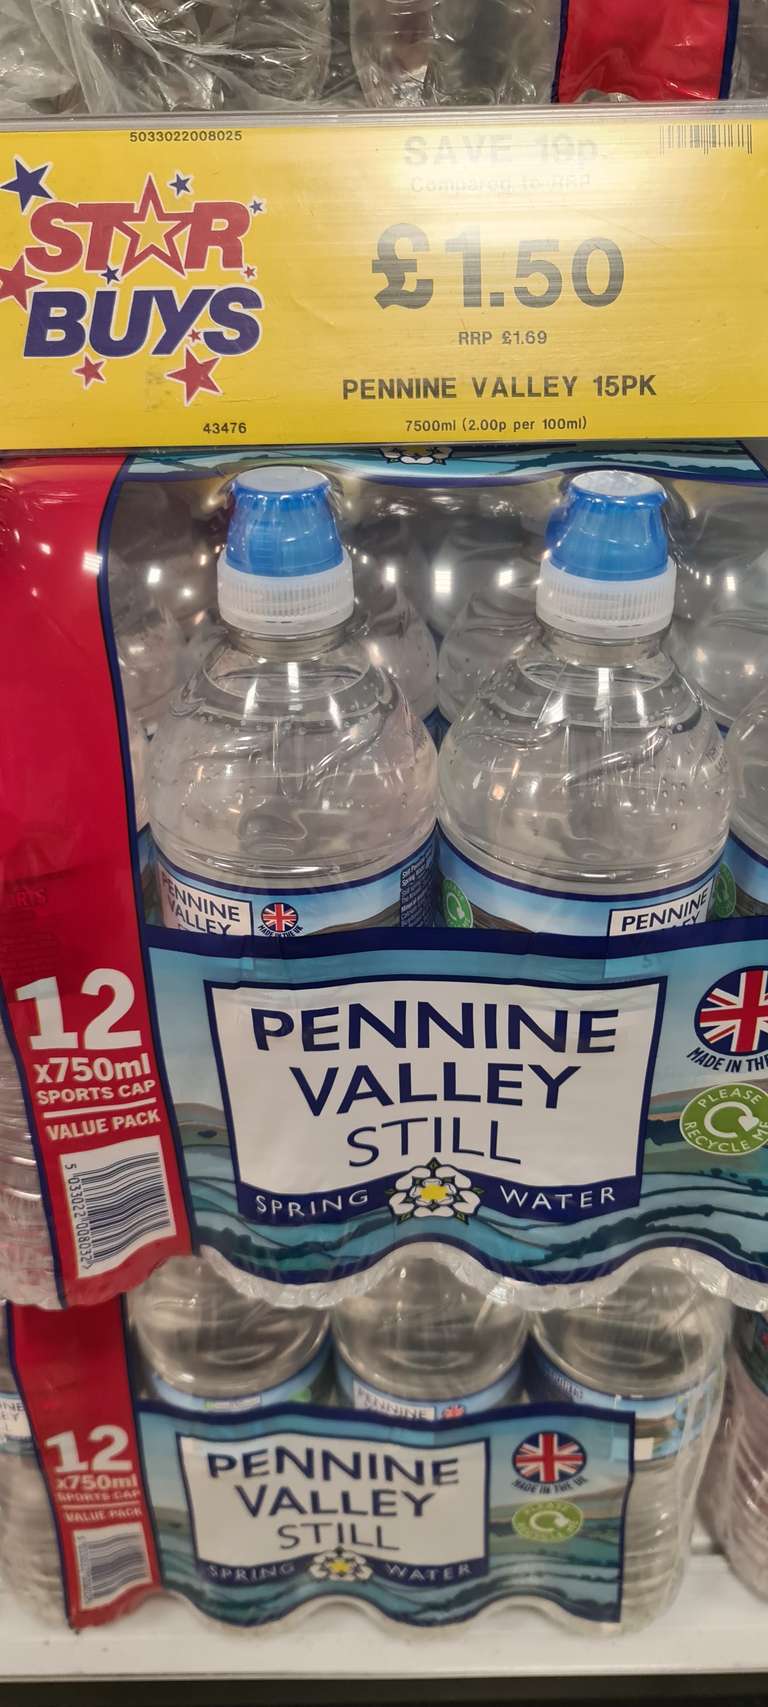 Pennine Valley Still Water £1.50 for 15 x 500 ml, 12 x 750 ml, 24 x 330 ml packs @ Home Bargains Edmonton Green